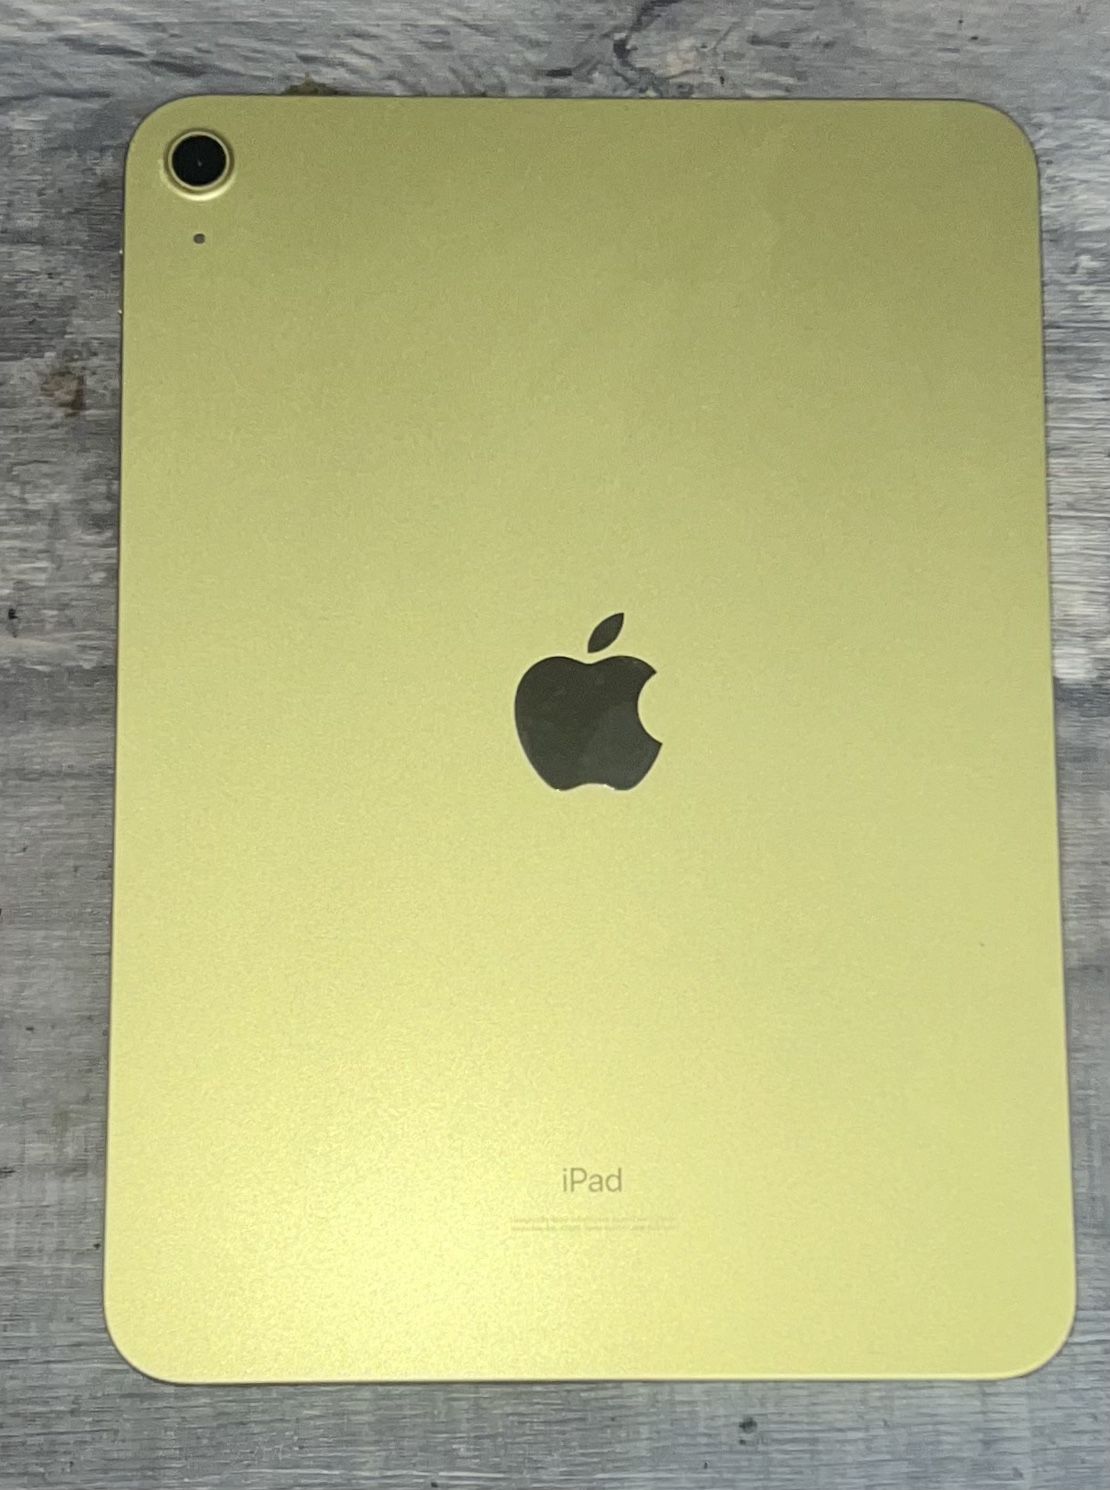 Apple - 10.9-Inch iPad - Latest Model - (10th Generation) with Wi-Fi - 64GB - Gold